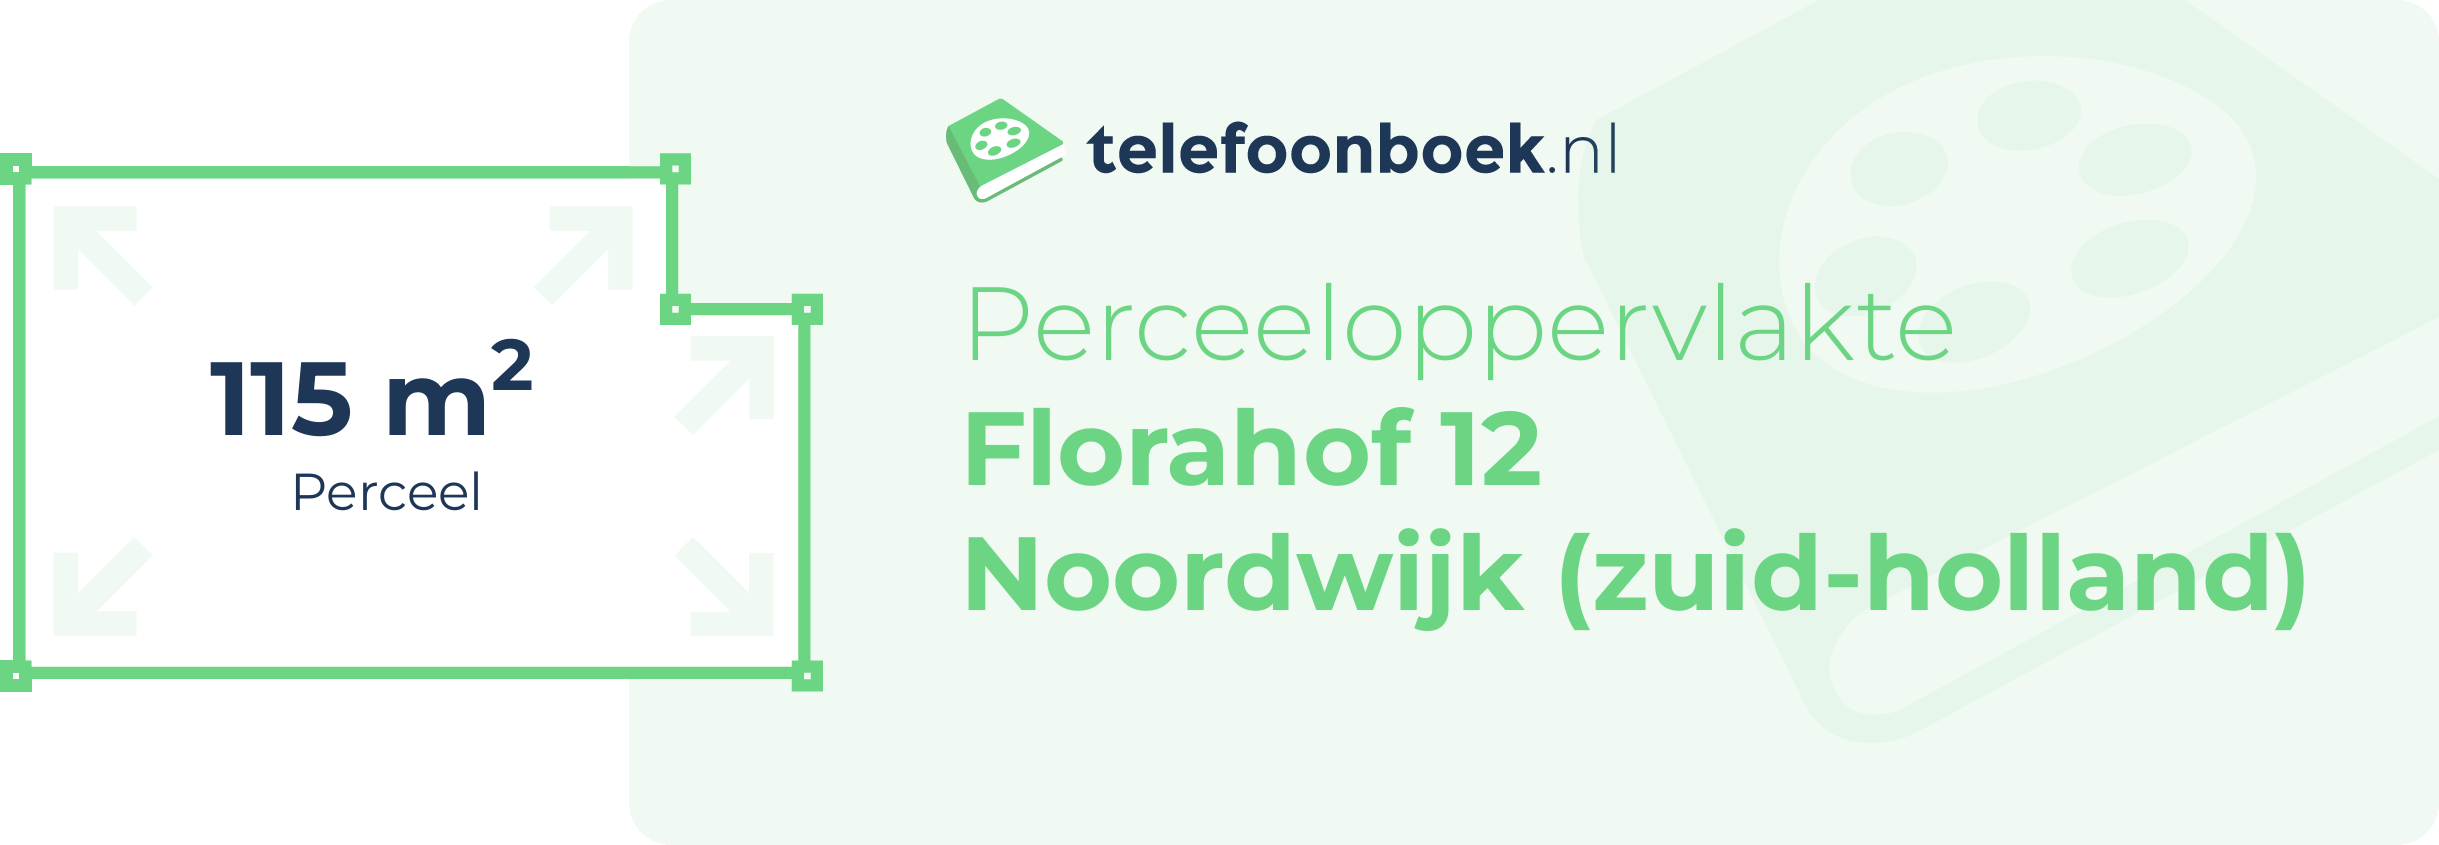 Perceeloppervlakte Florahof 12 Noordwijk (Zuid-Holland)